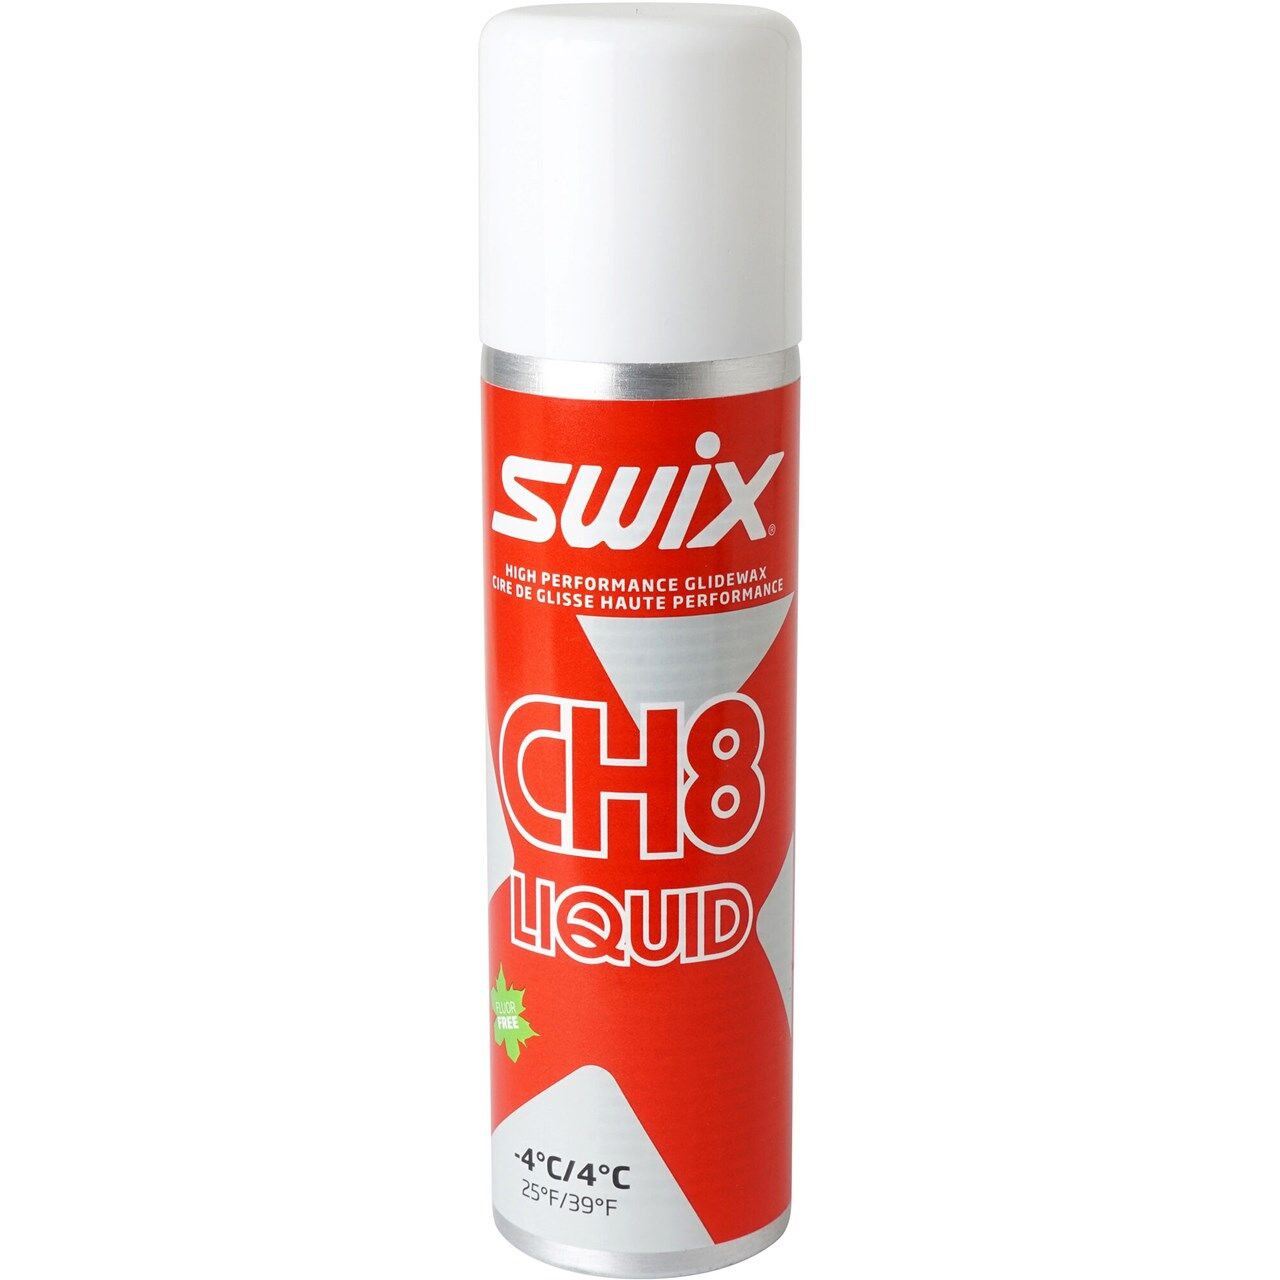 Swix CH08X Liquid -4C/+4C (125ml)